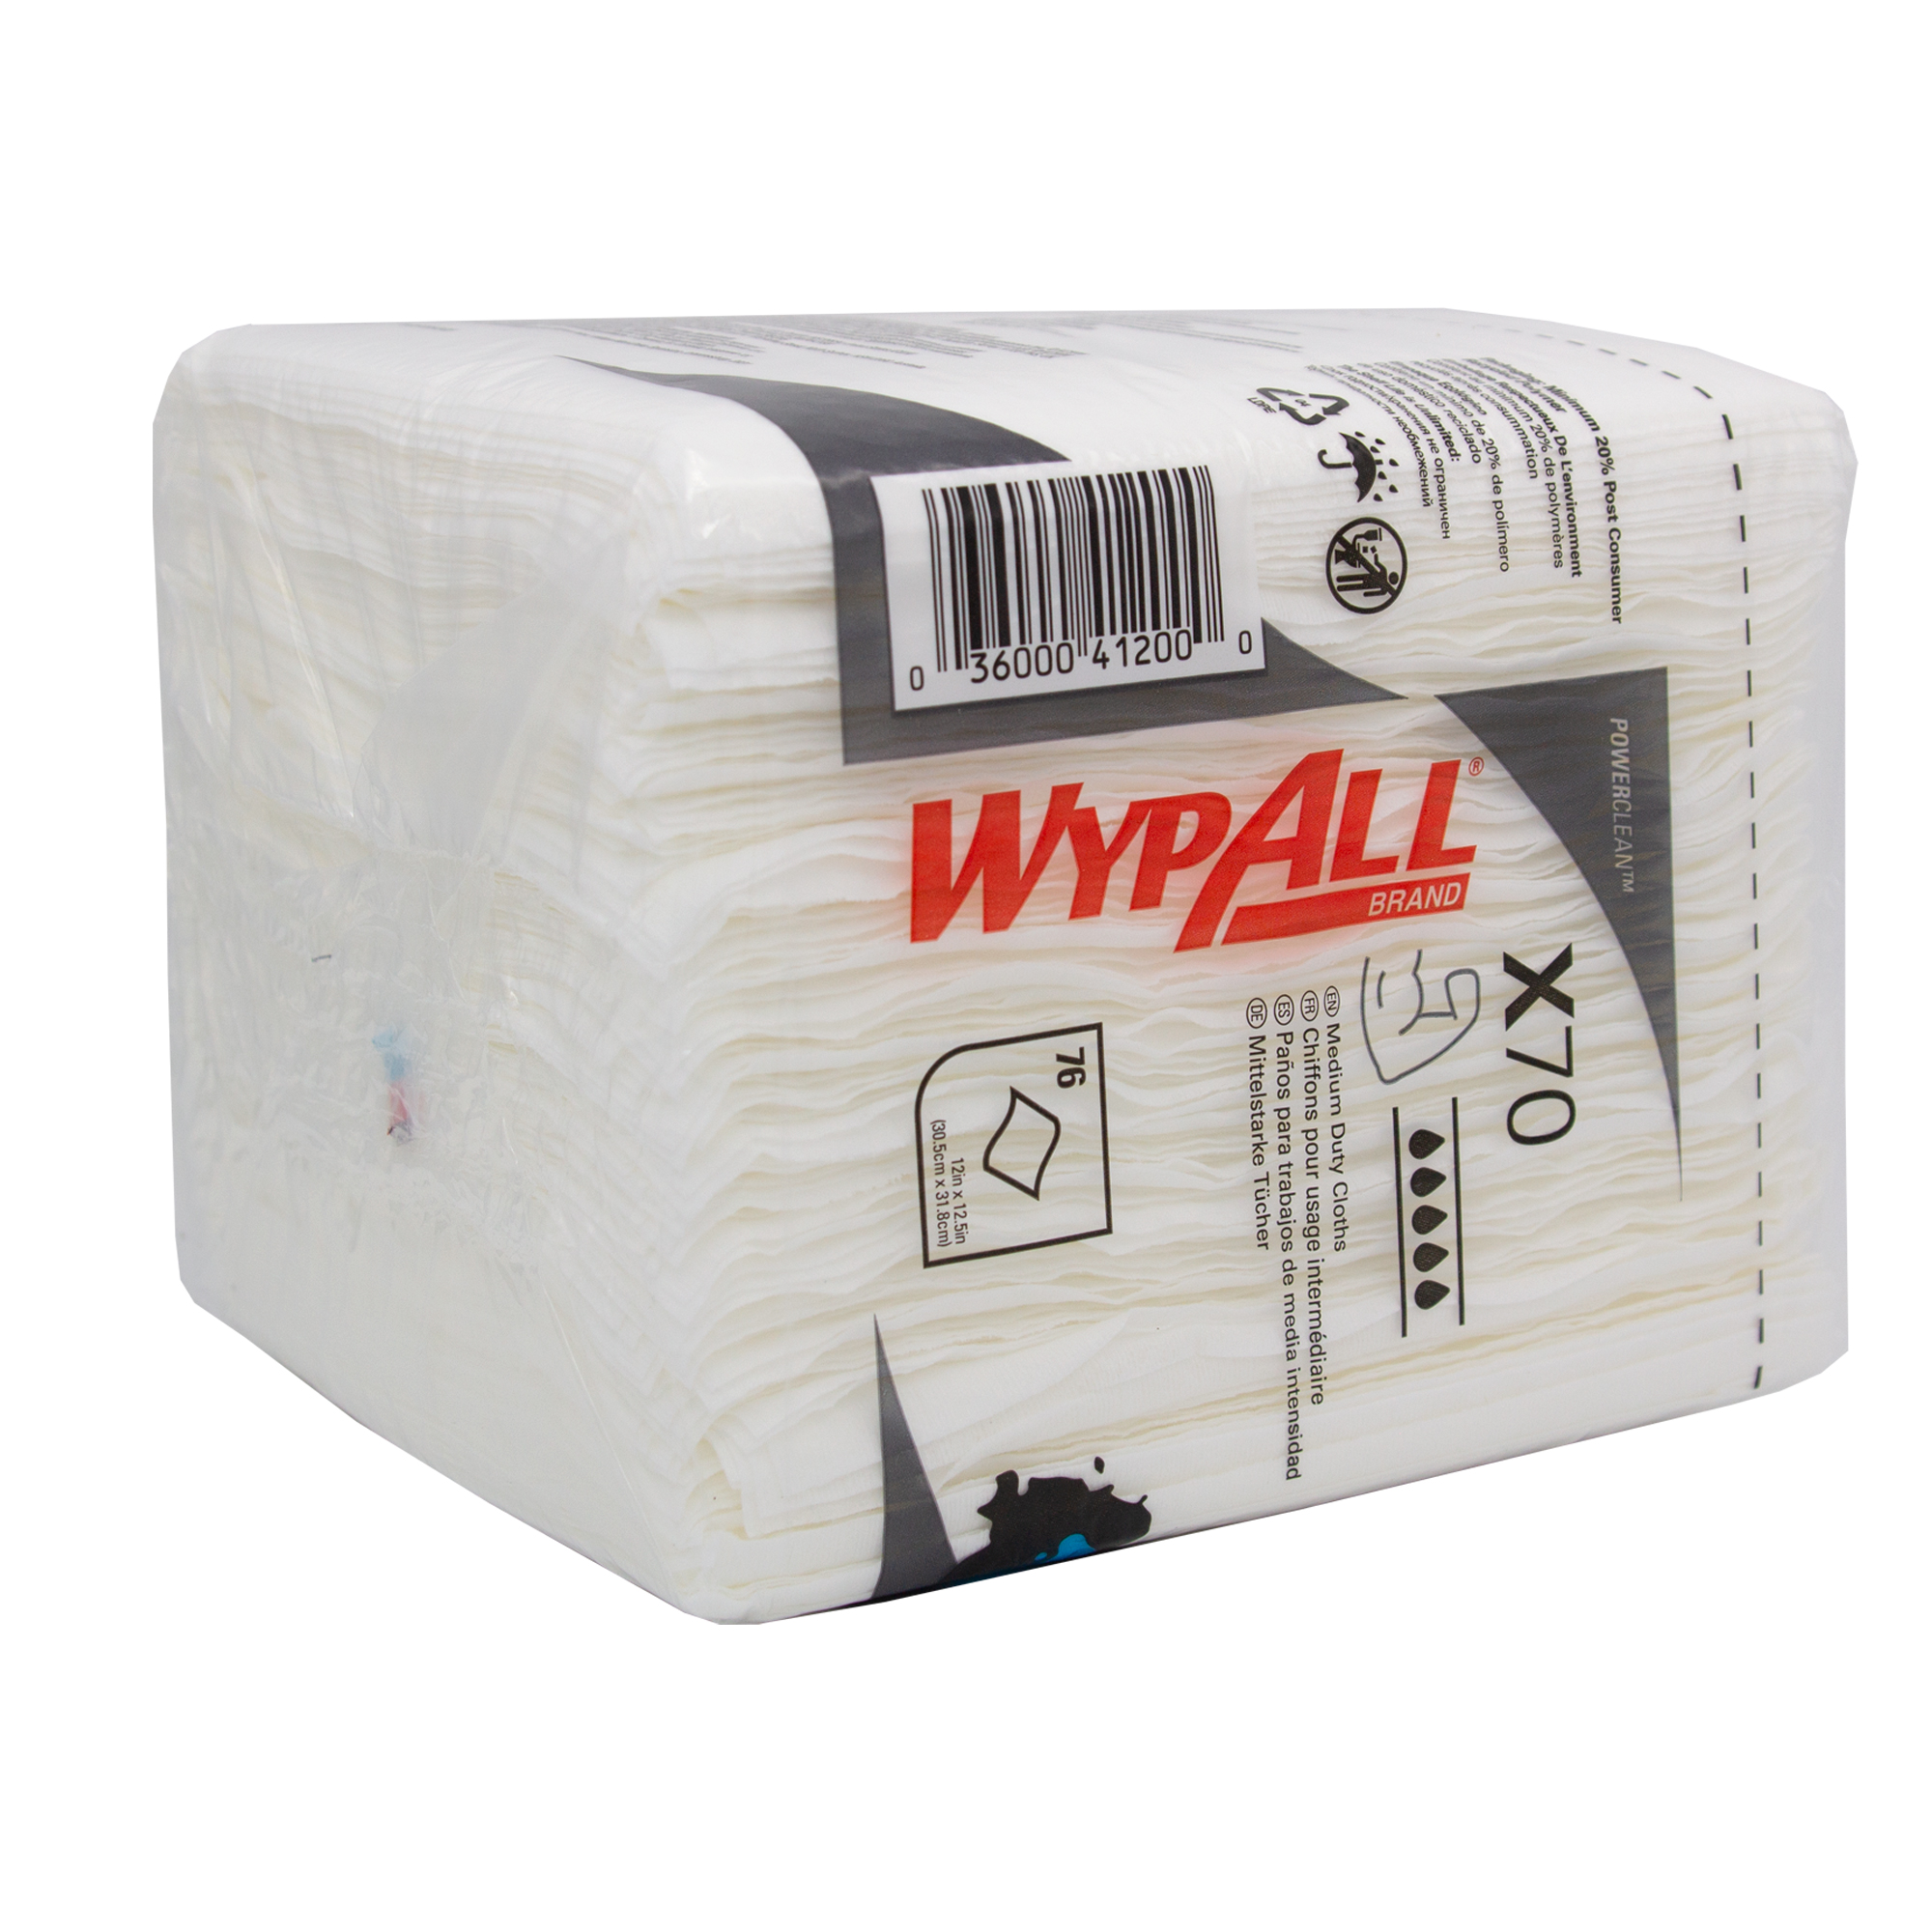 WypAll 8387 Power Clean Wischtücher X70 1/4-Falz weiß, 1-lagig, 30,5 x 31,8 cm, 912 Tücher